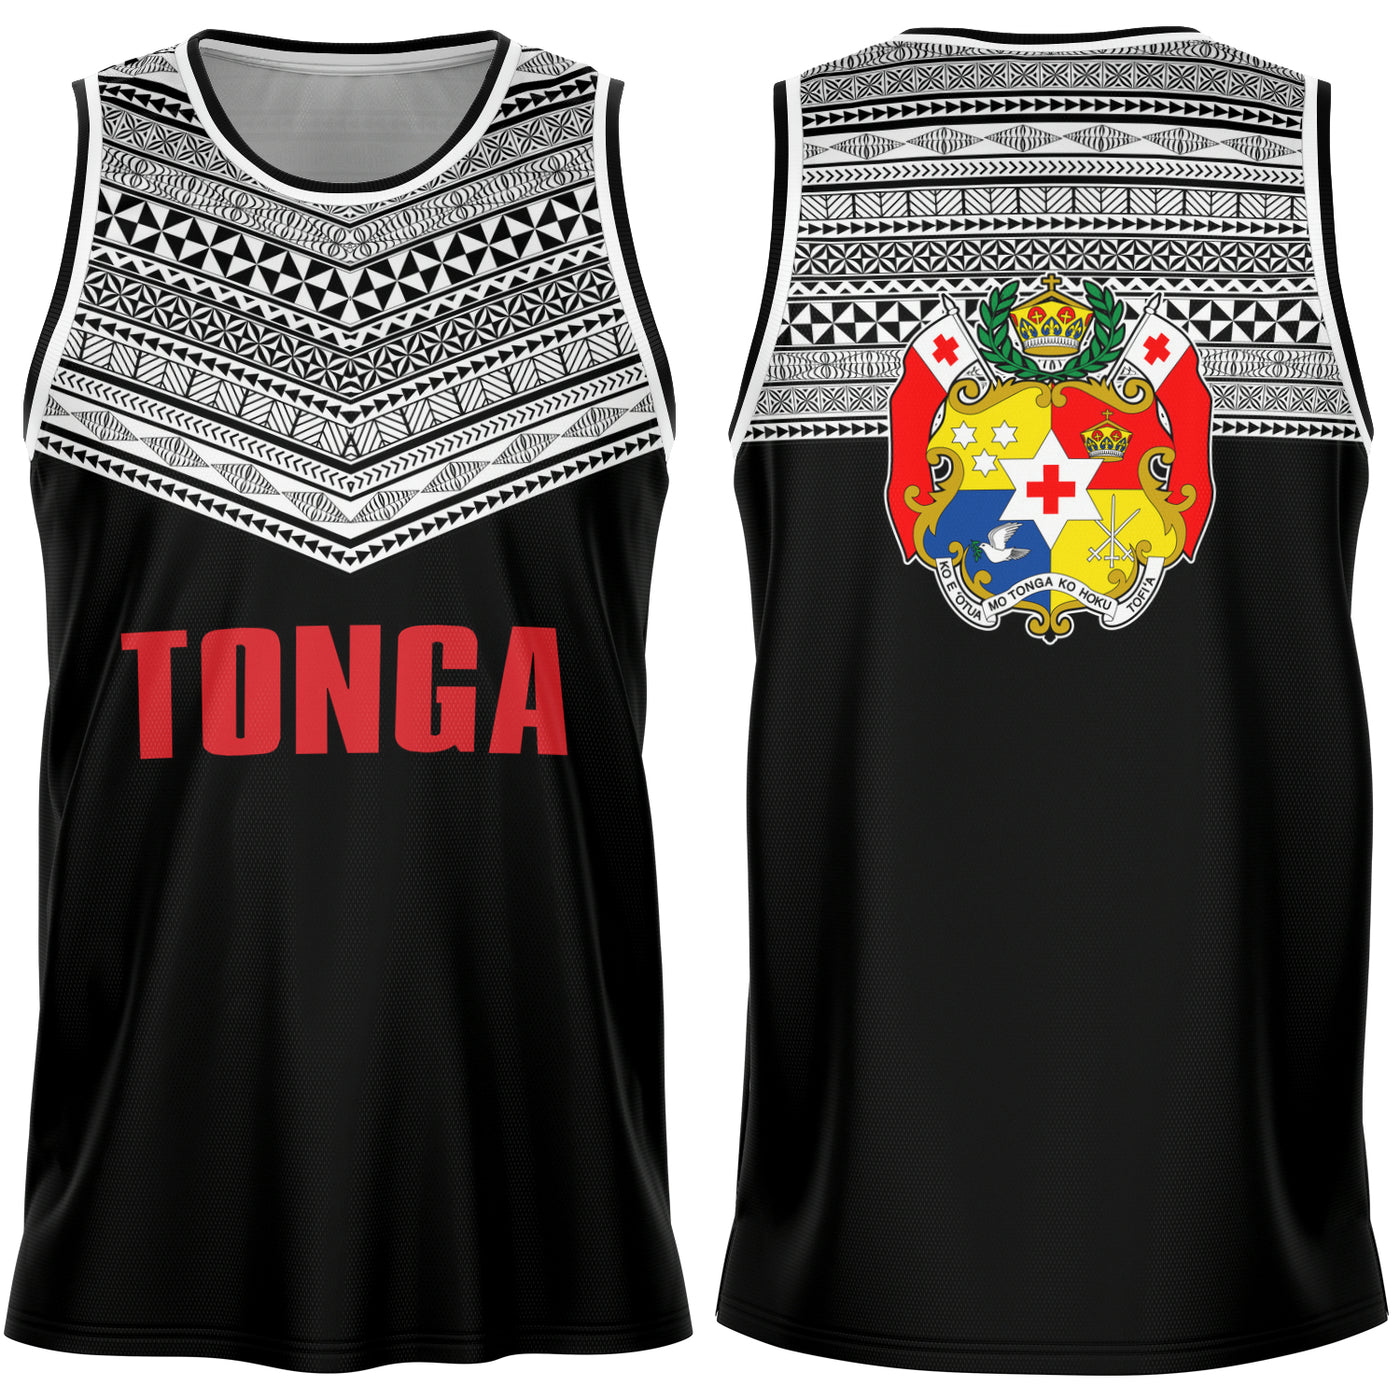 Tonga Basketball Jersey Black White – Atikapu